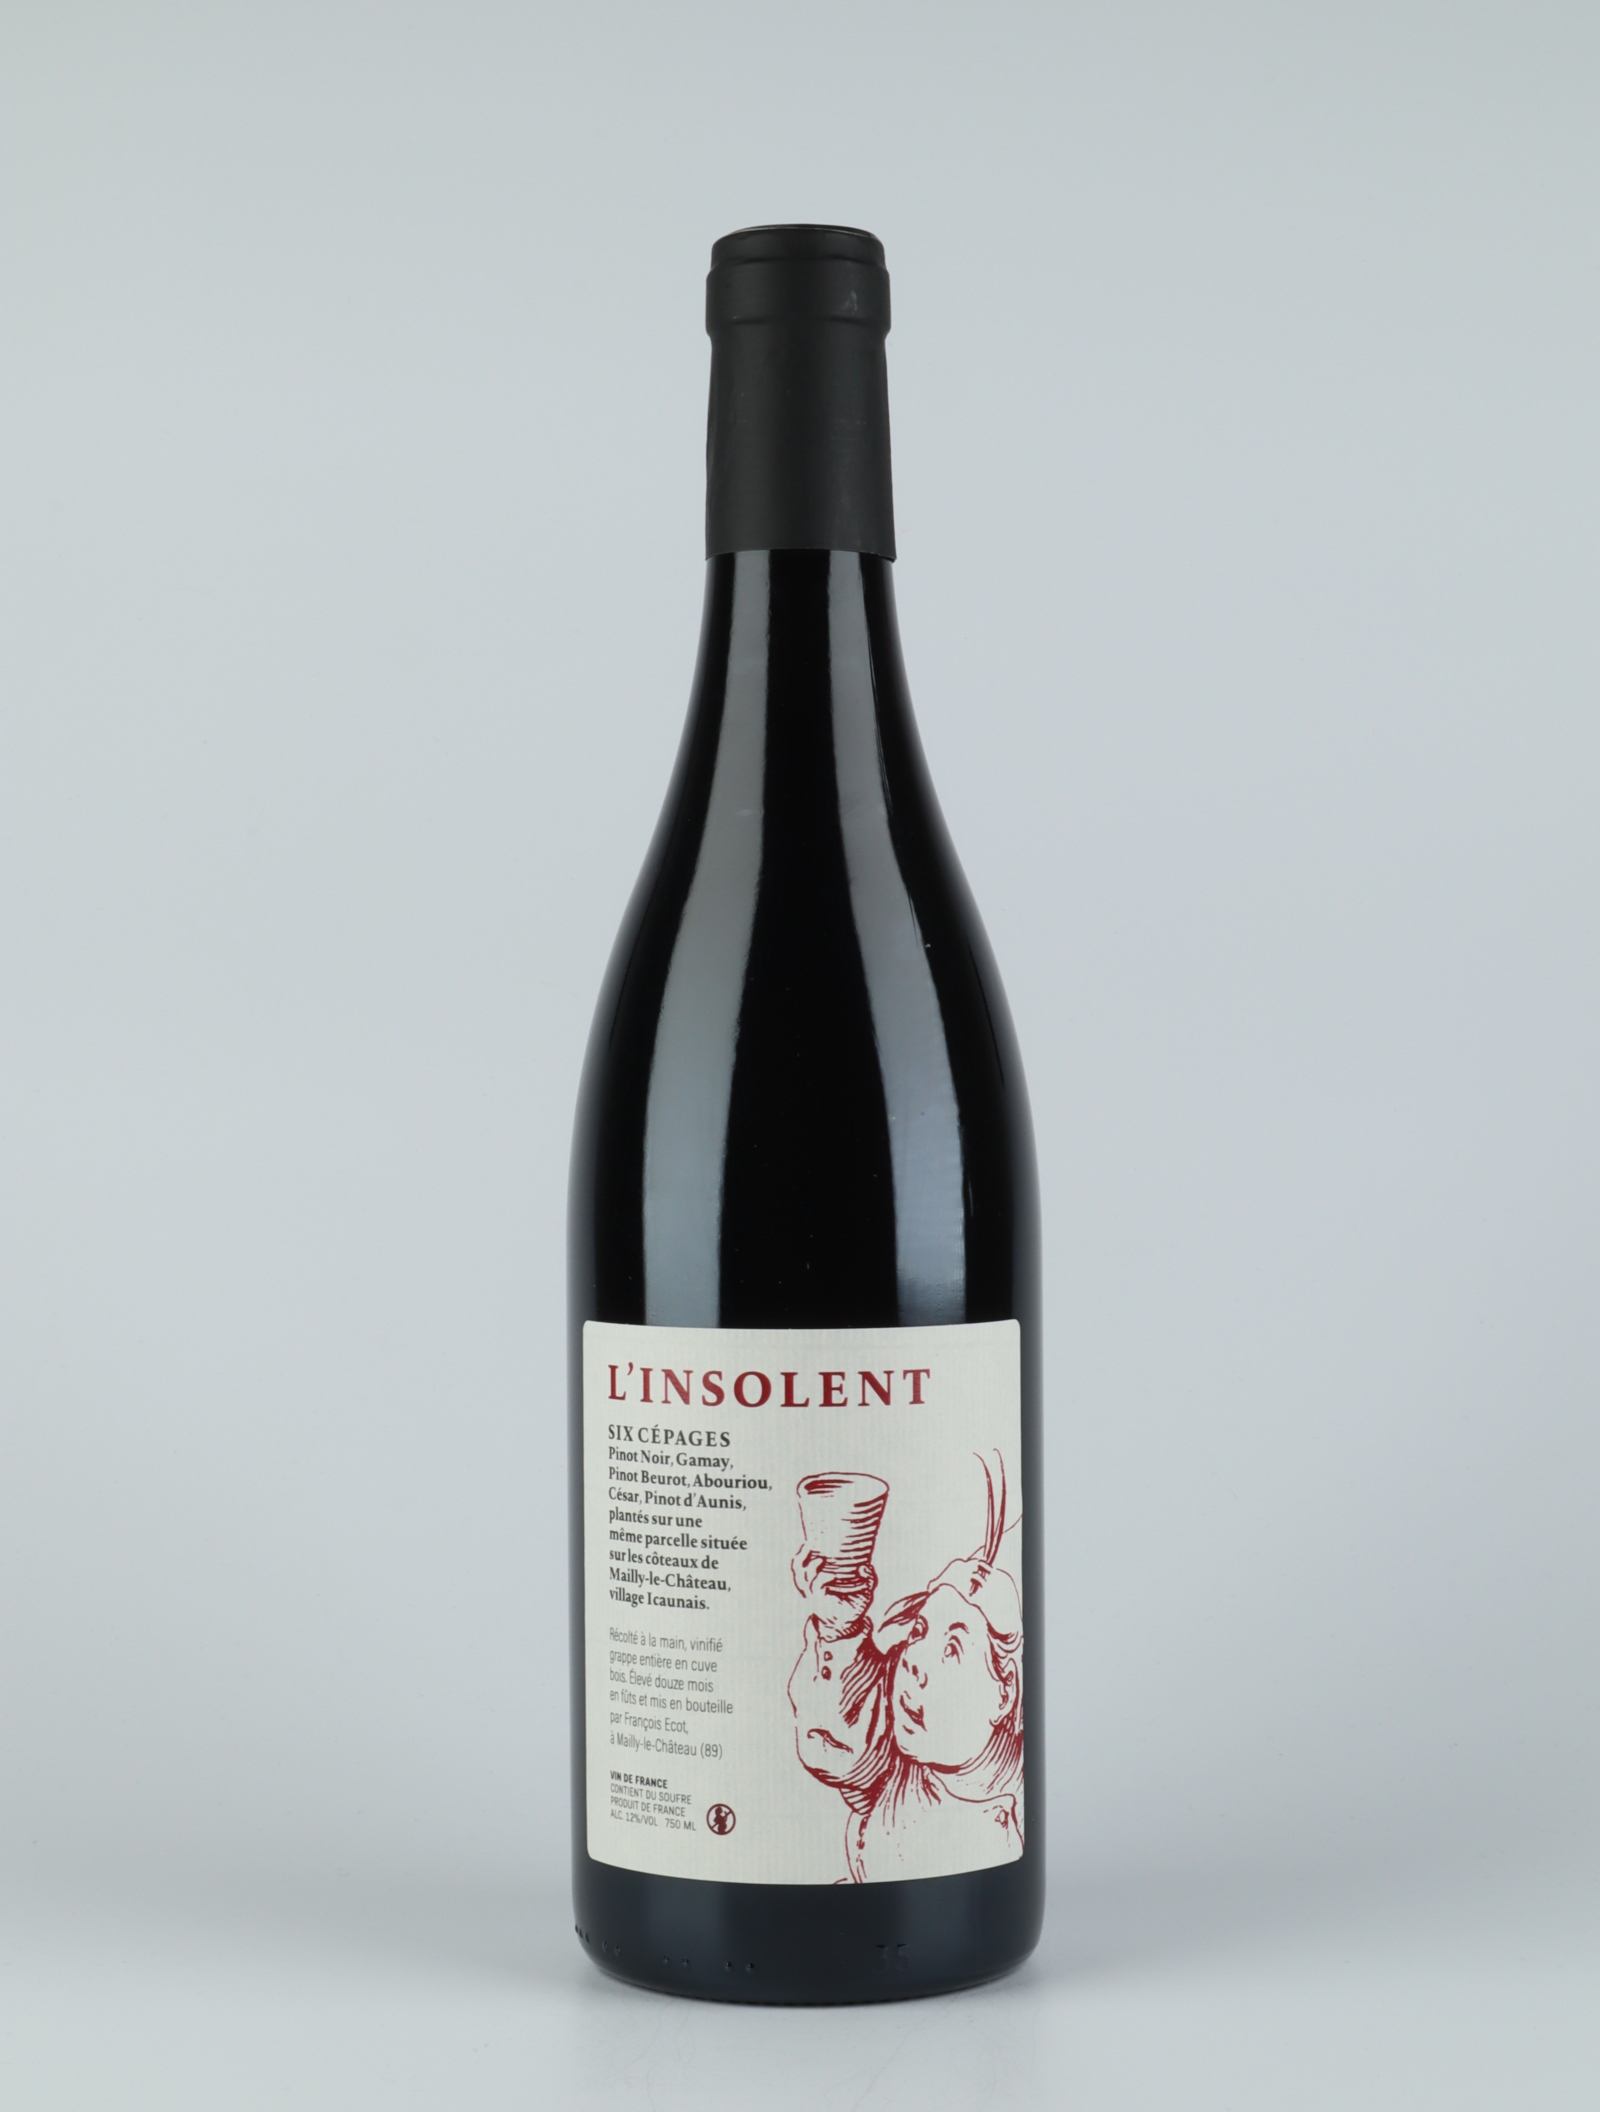 A bottle 2018 L'insolent Red wine from François Ecot, Burgundy in France